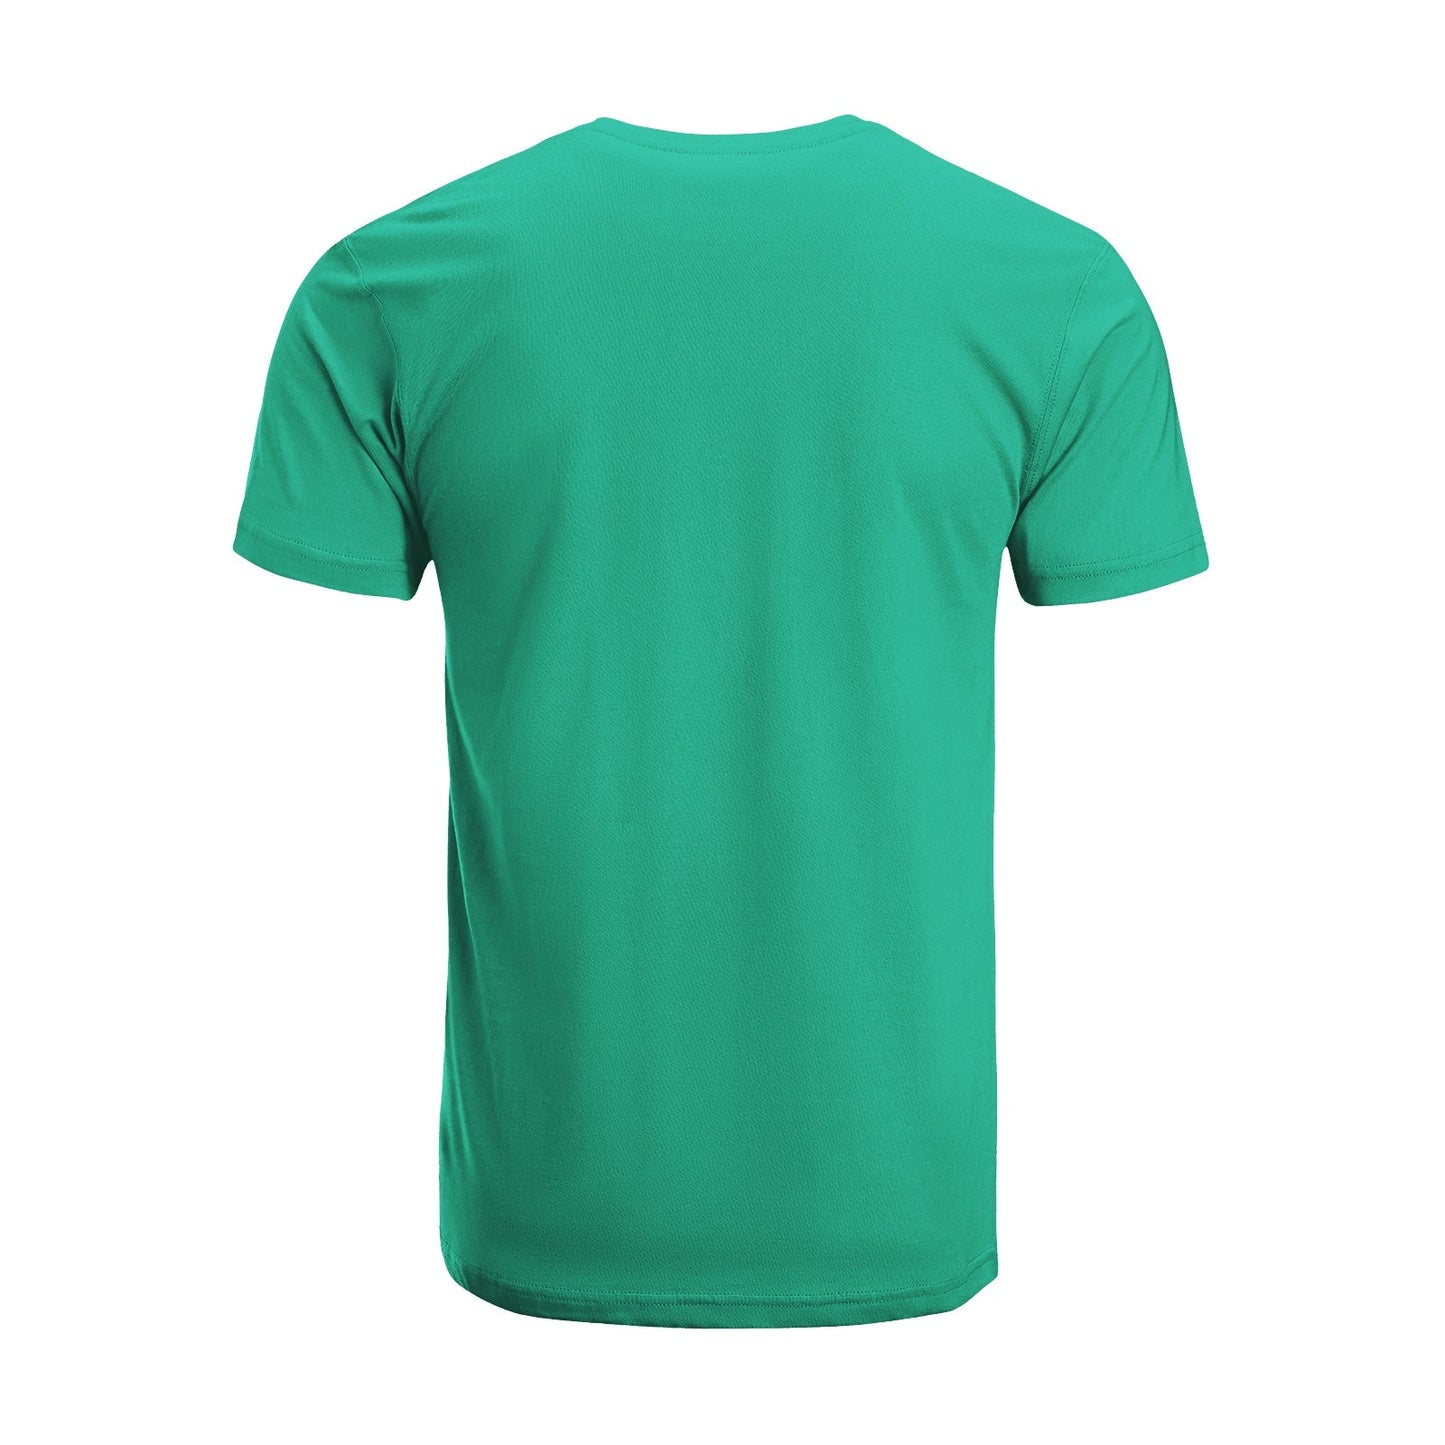 Unisex Short Sleeve Crew Neck Cotton Jersey T-Shirt MOM 02